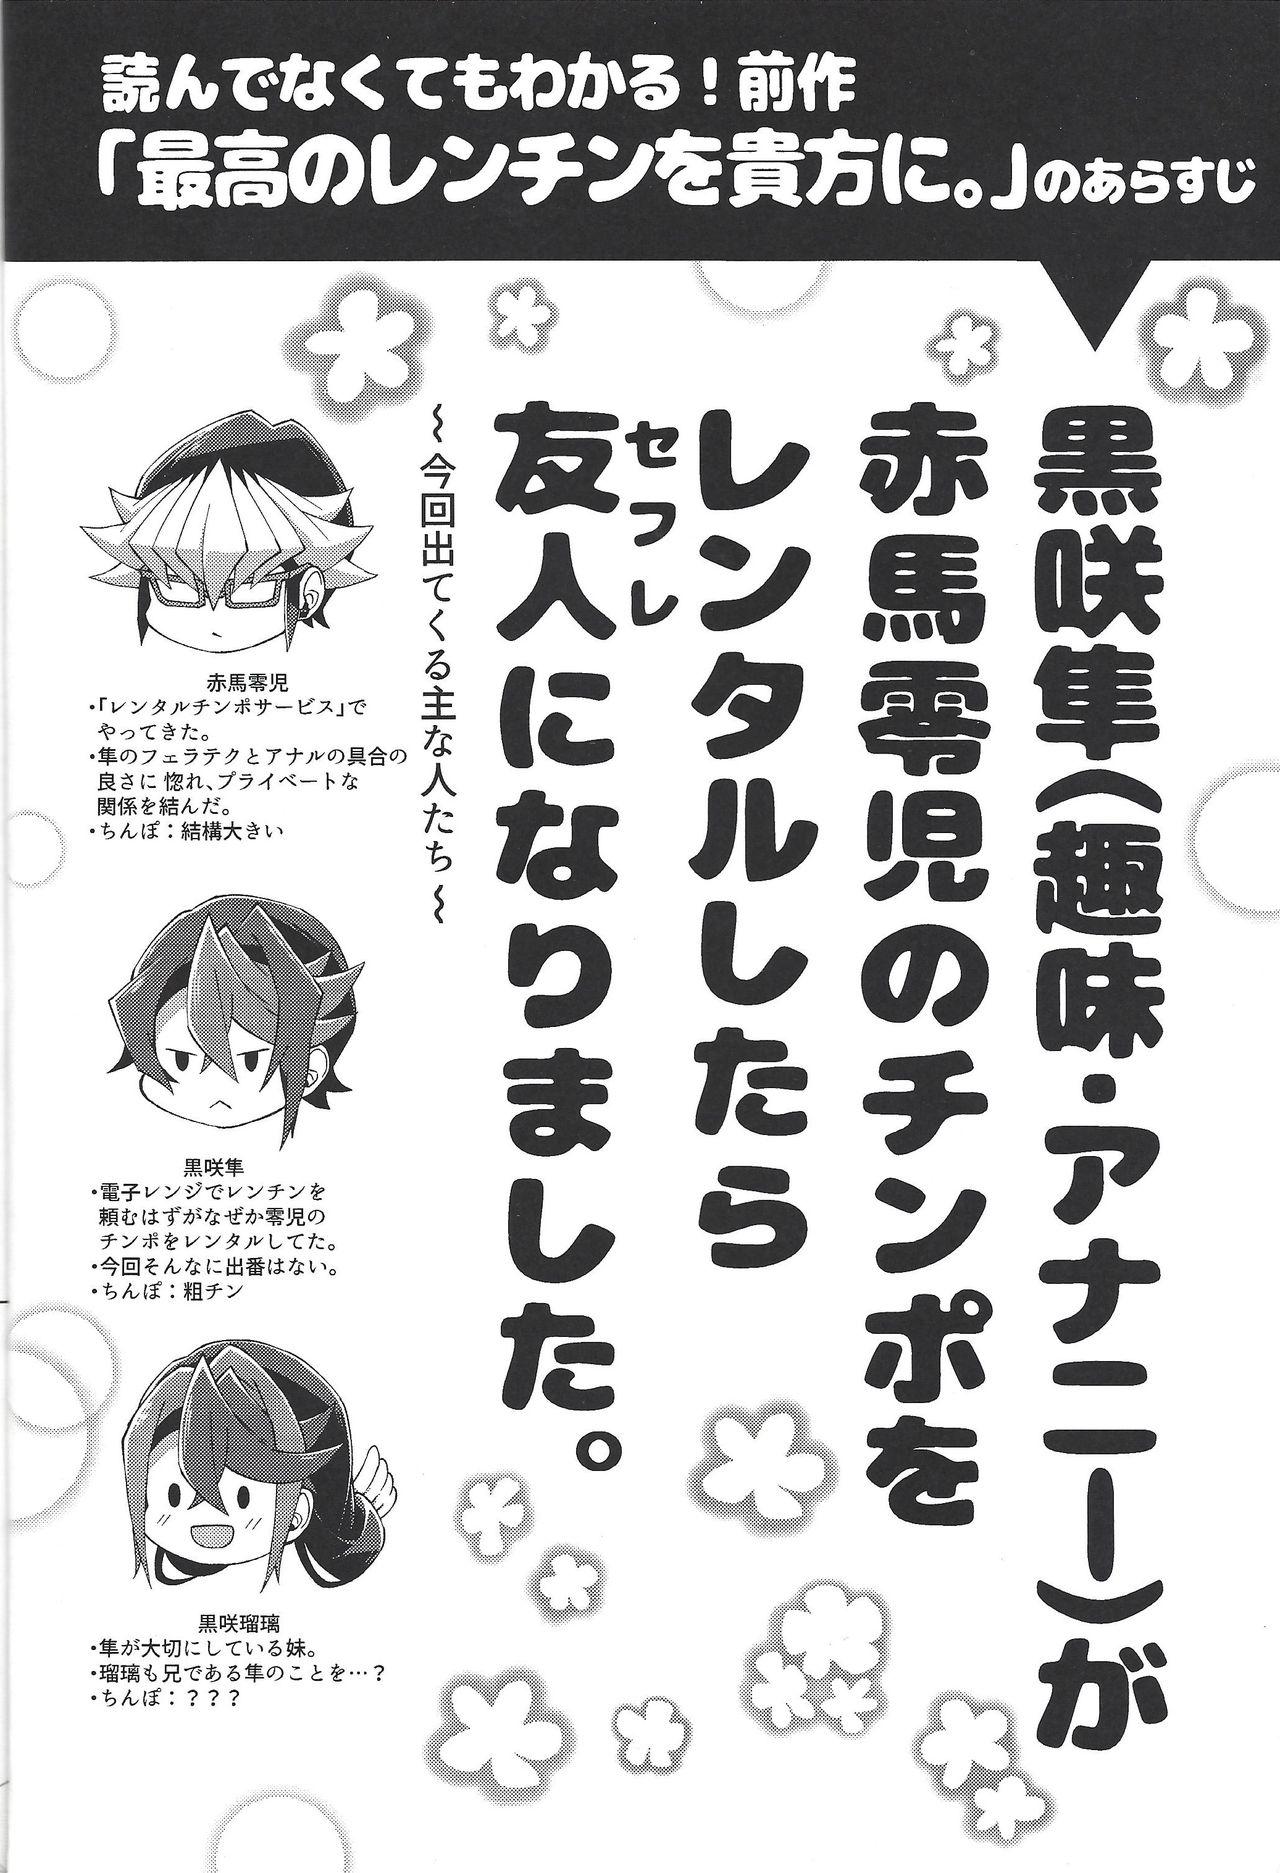 Gostoso Saikou no Nikubenki o Kanojo ni. - Yu-gi-oh arc-v Party - Page 3